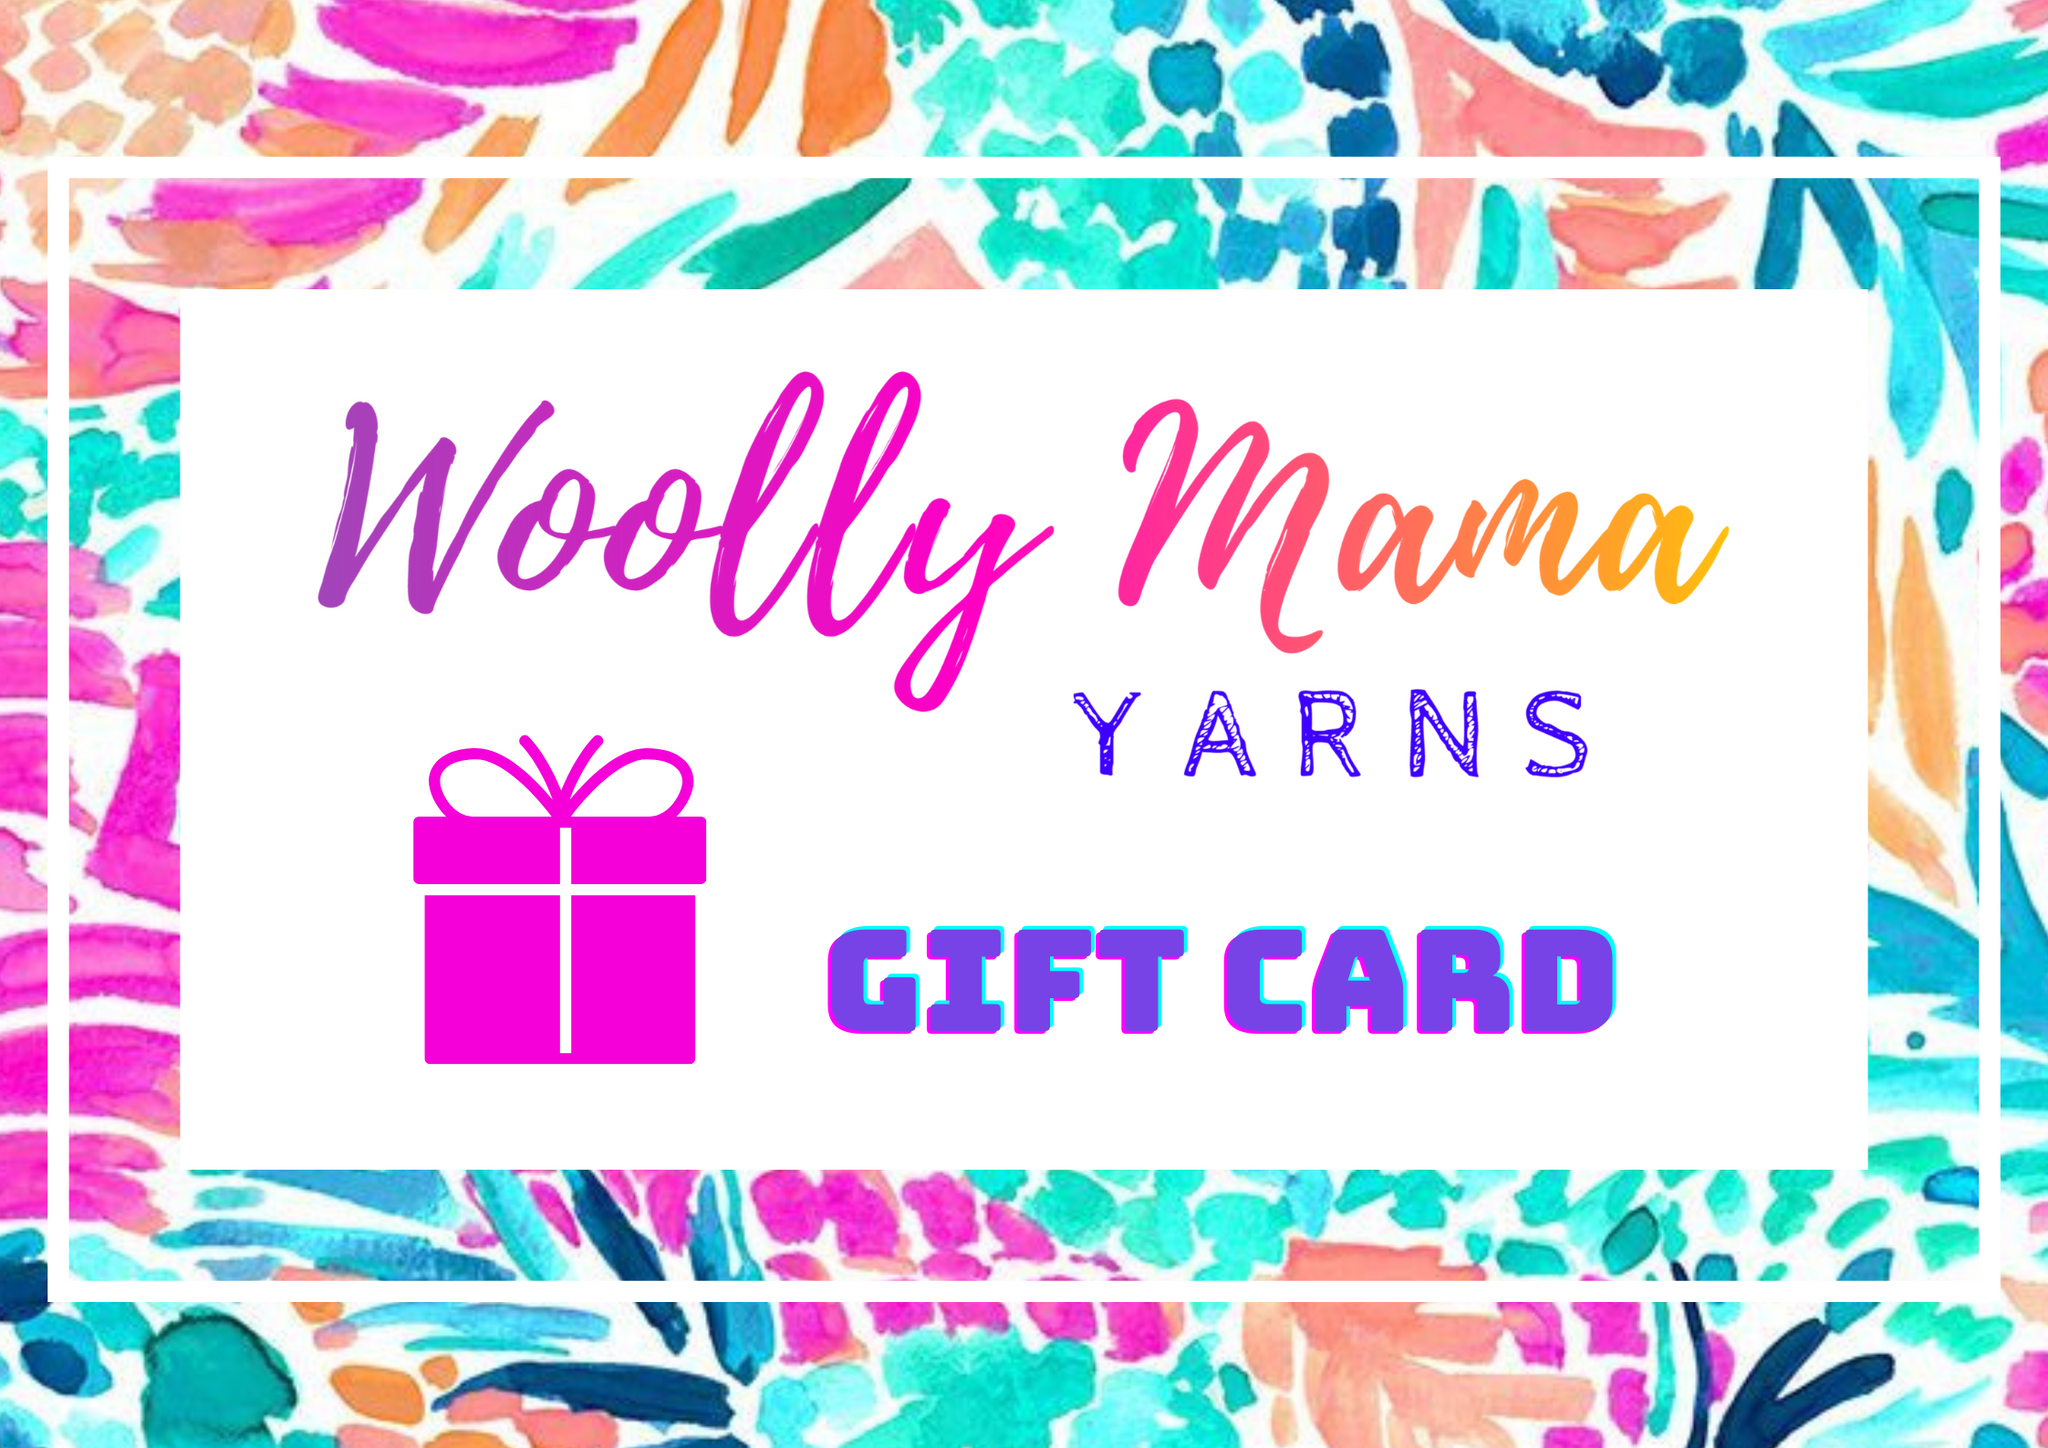 Woolly Mama Yarns Gift Card